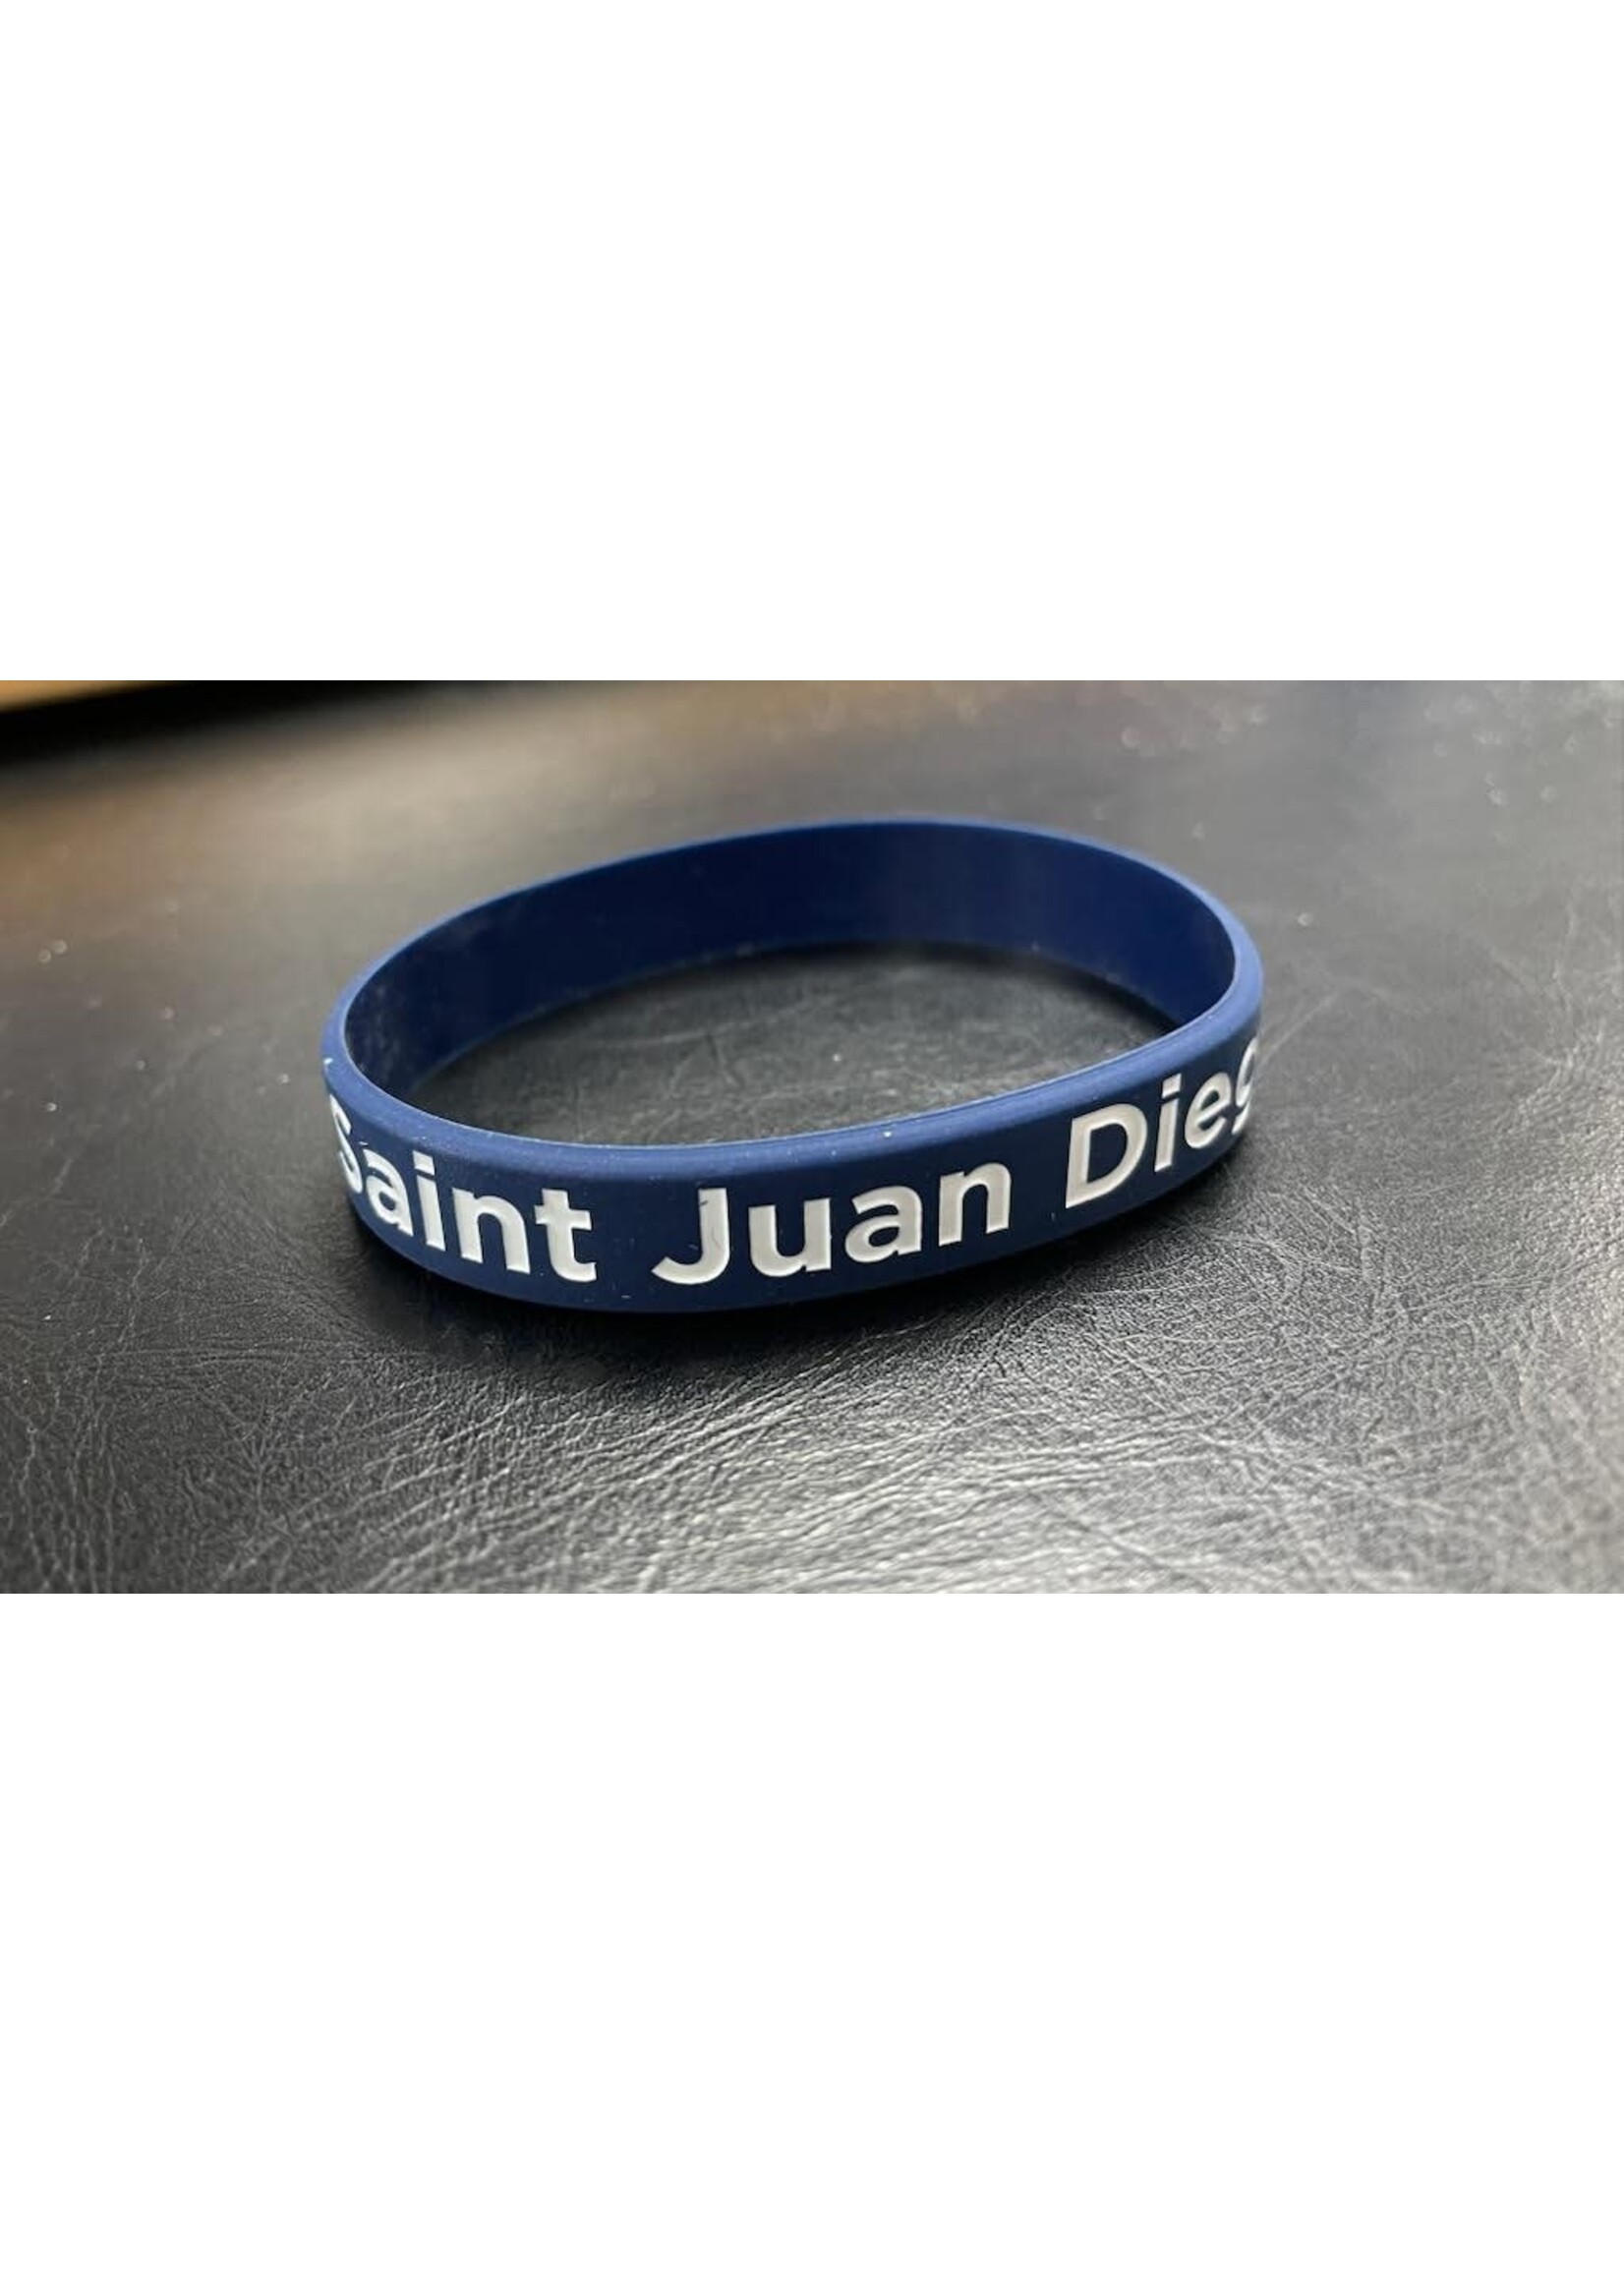 NON-UNIFORM Wrist Band-Pray for Us Juan Diego